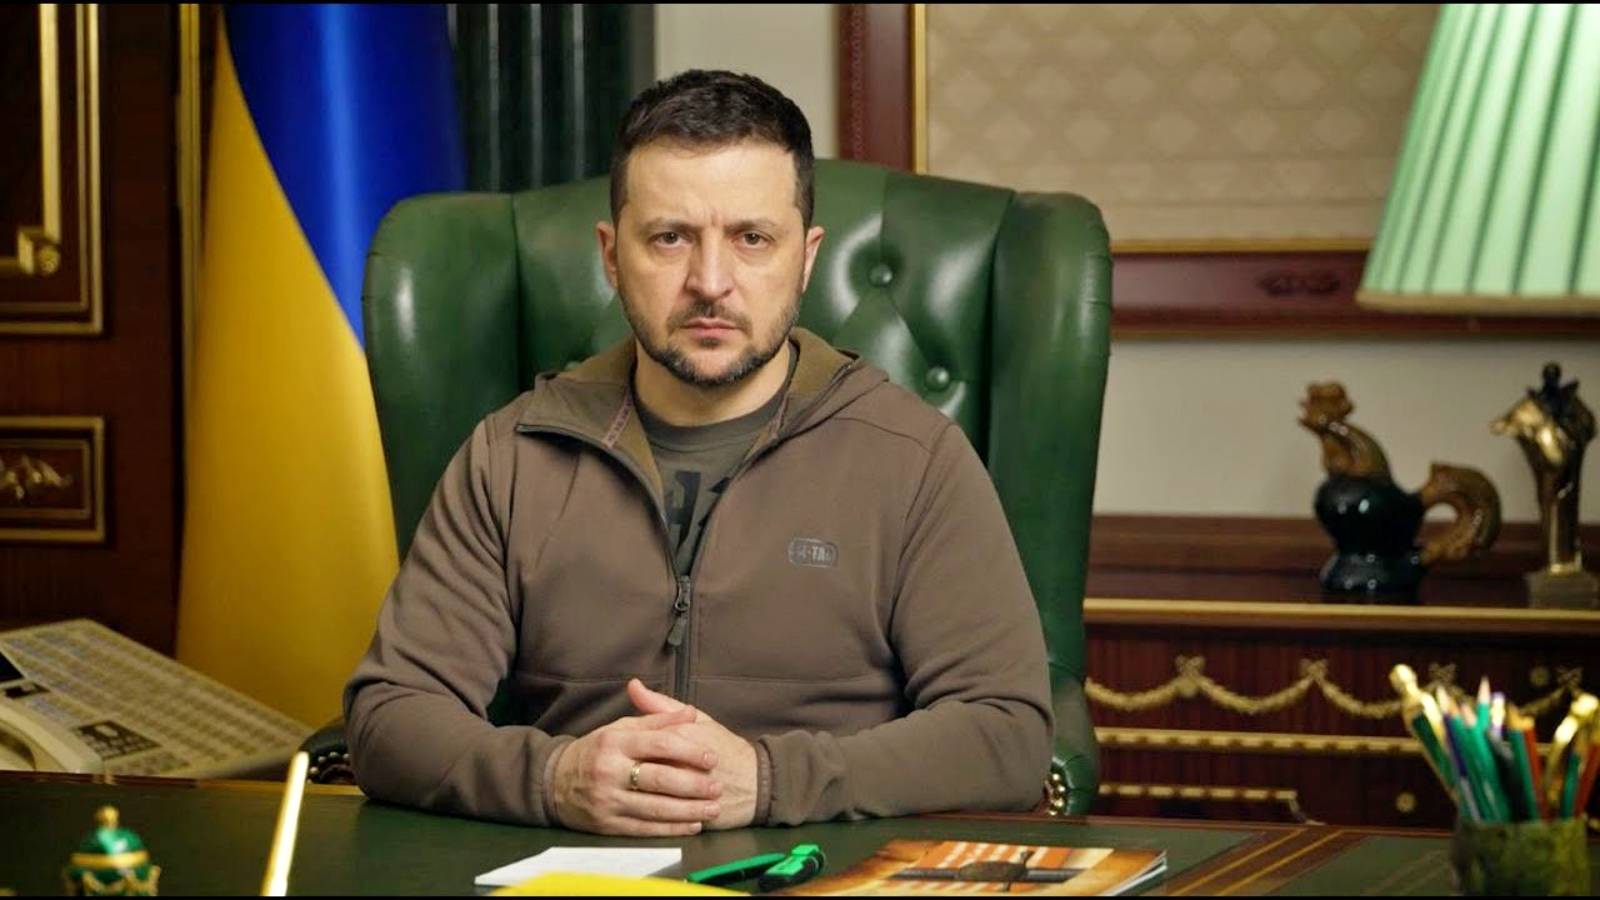 Volodimir Zelenski Anunta o Crestere a Presiunii Rusiei cu Atacuri in Donbas